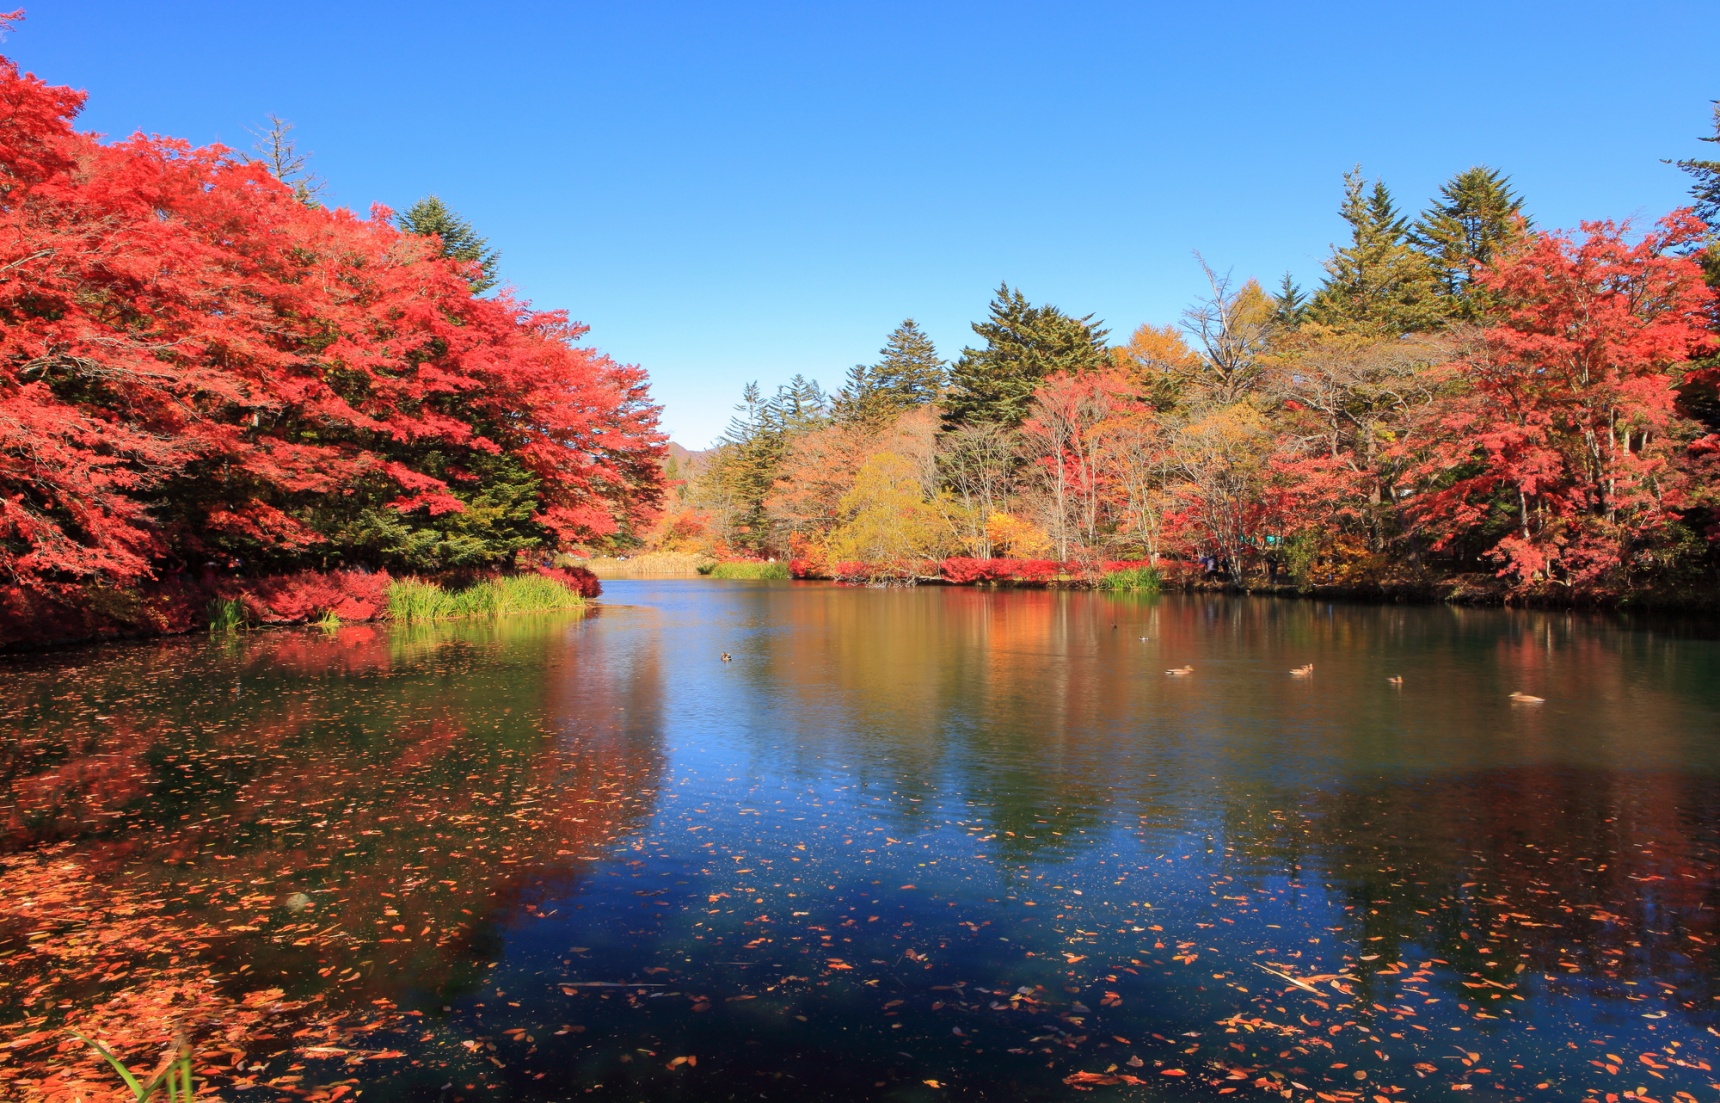 5 Outdoor Autumn Activities in Karuizawa